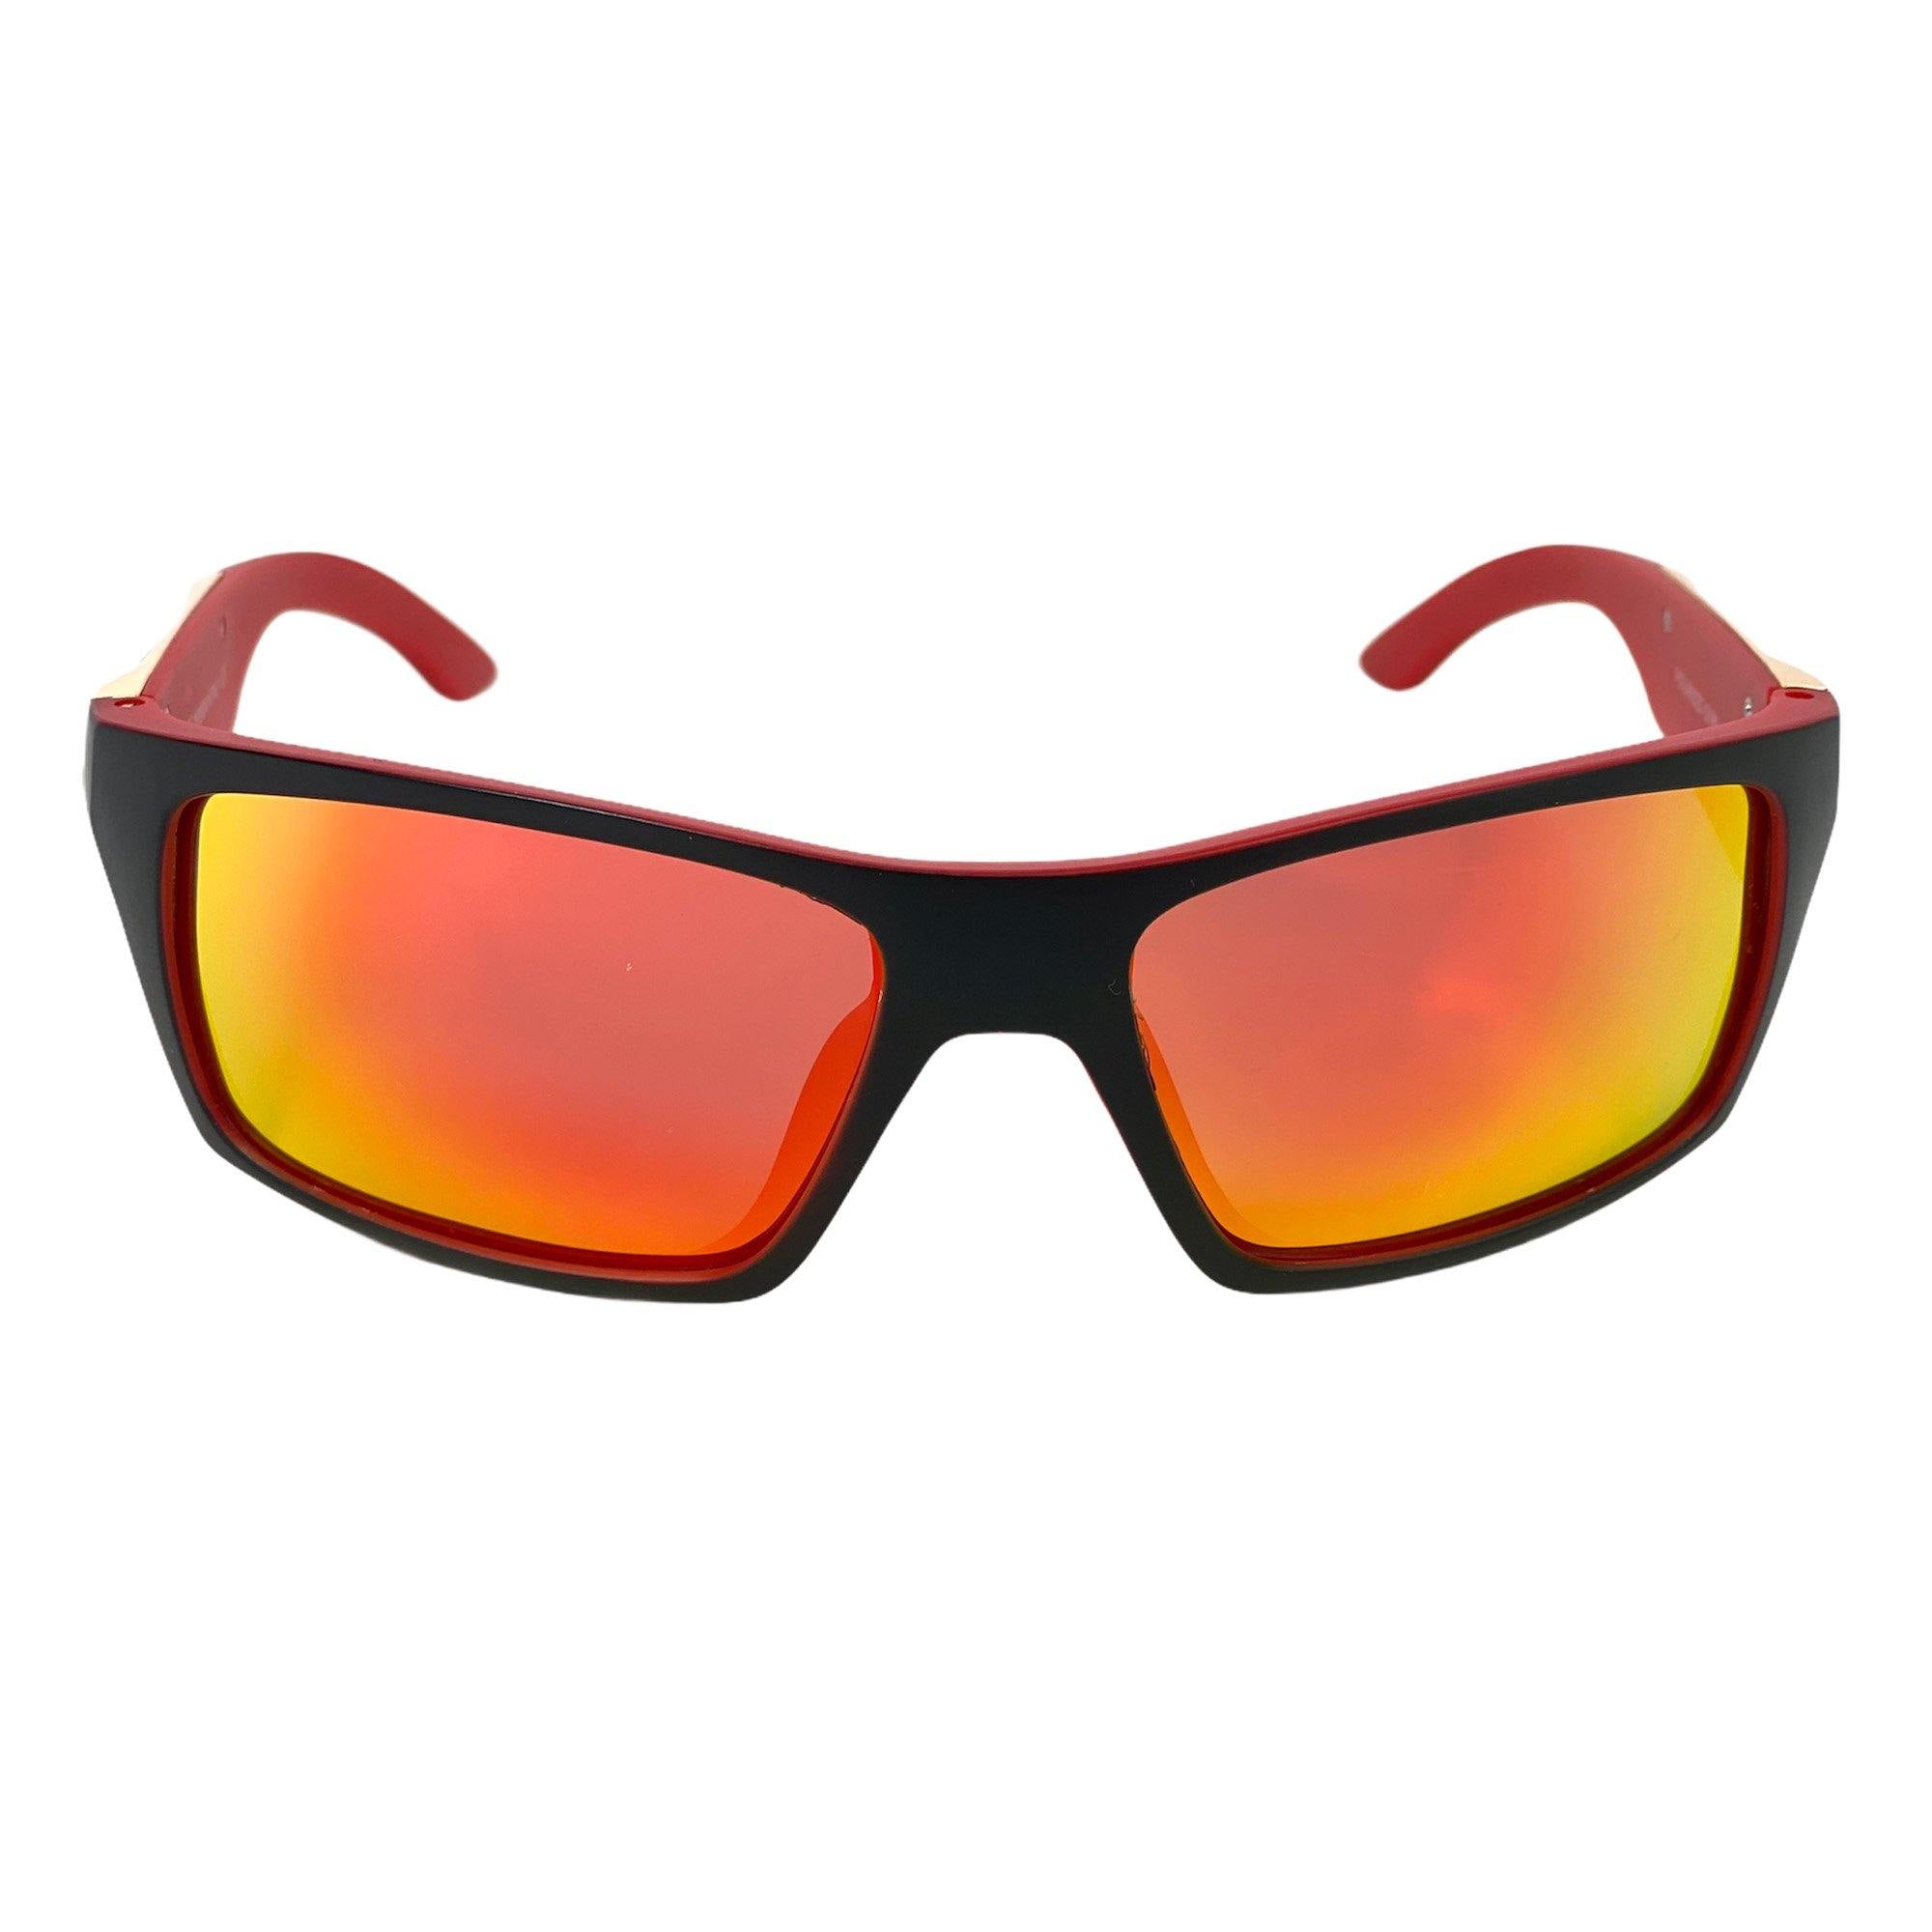 Dubery Sunglasses Website– Dubery Optics Sunglasses